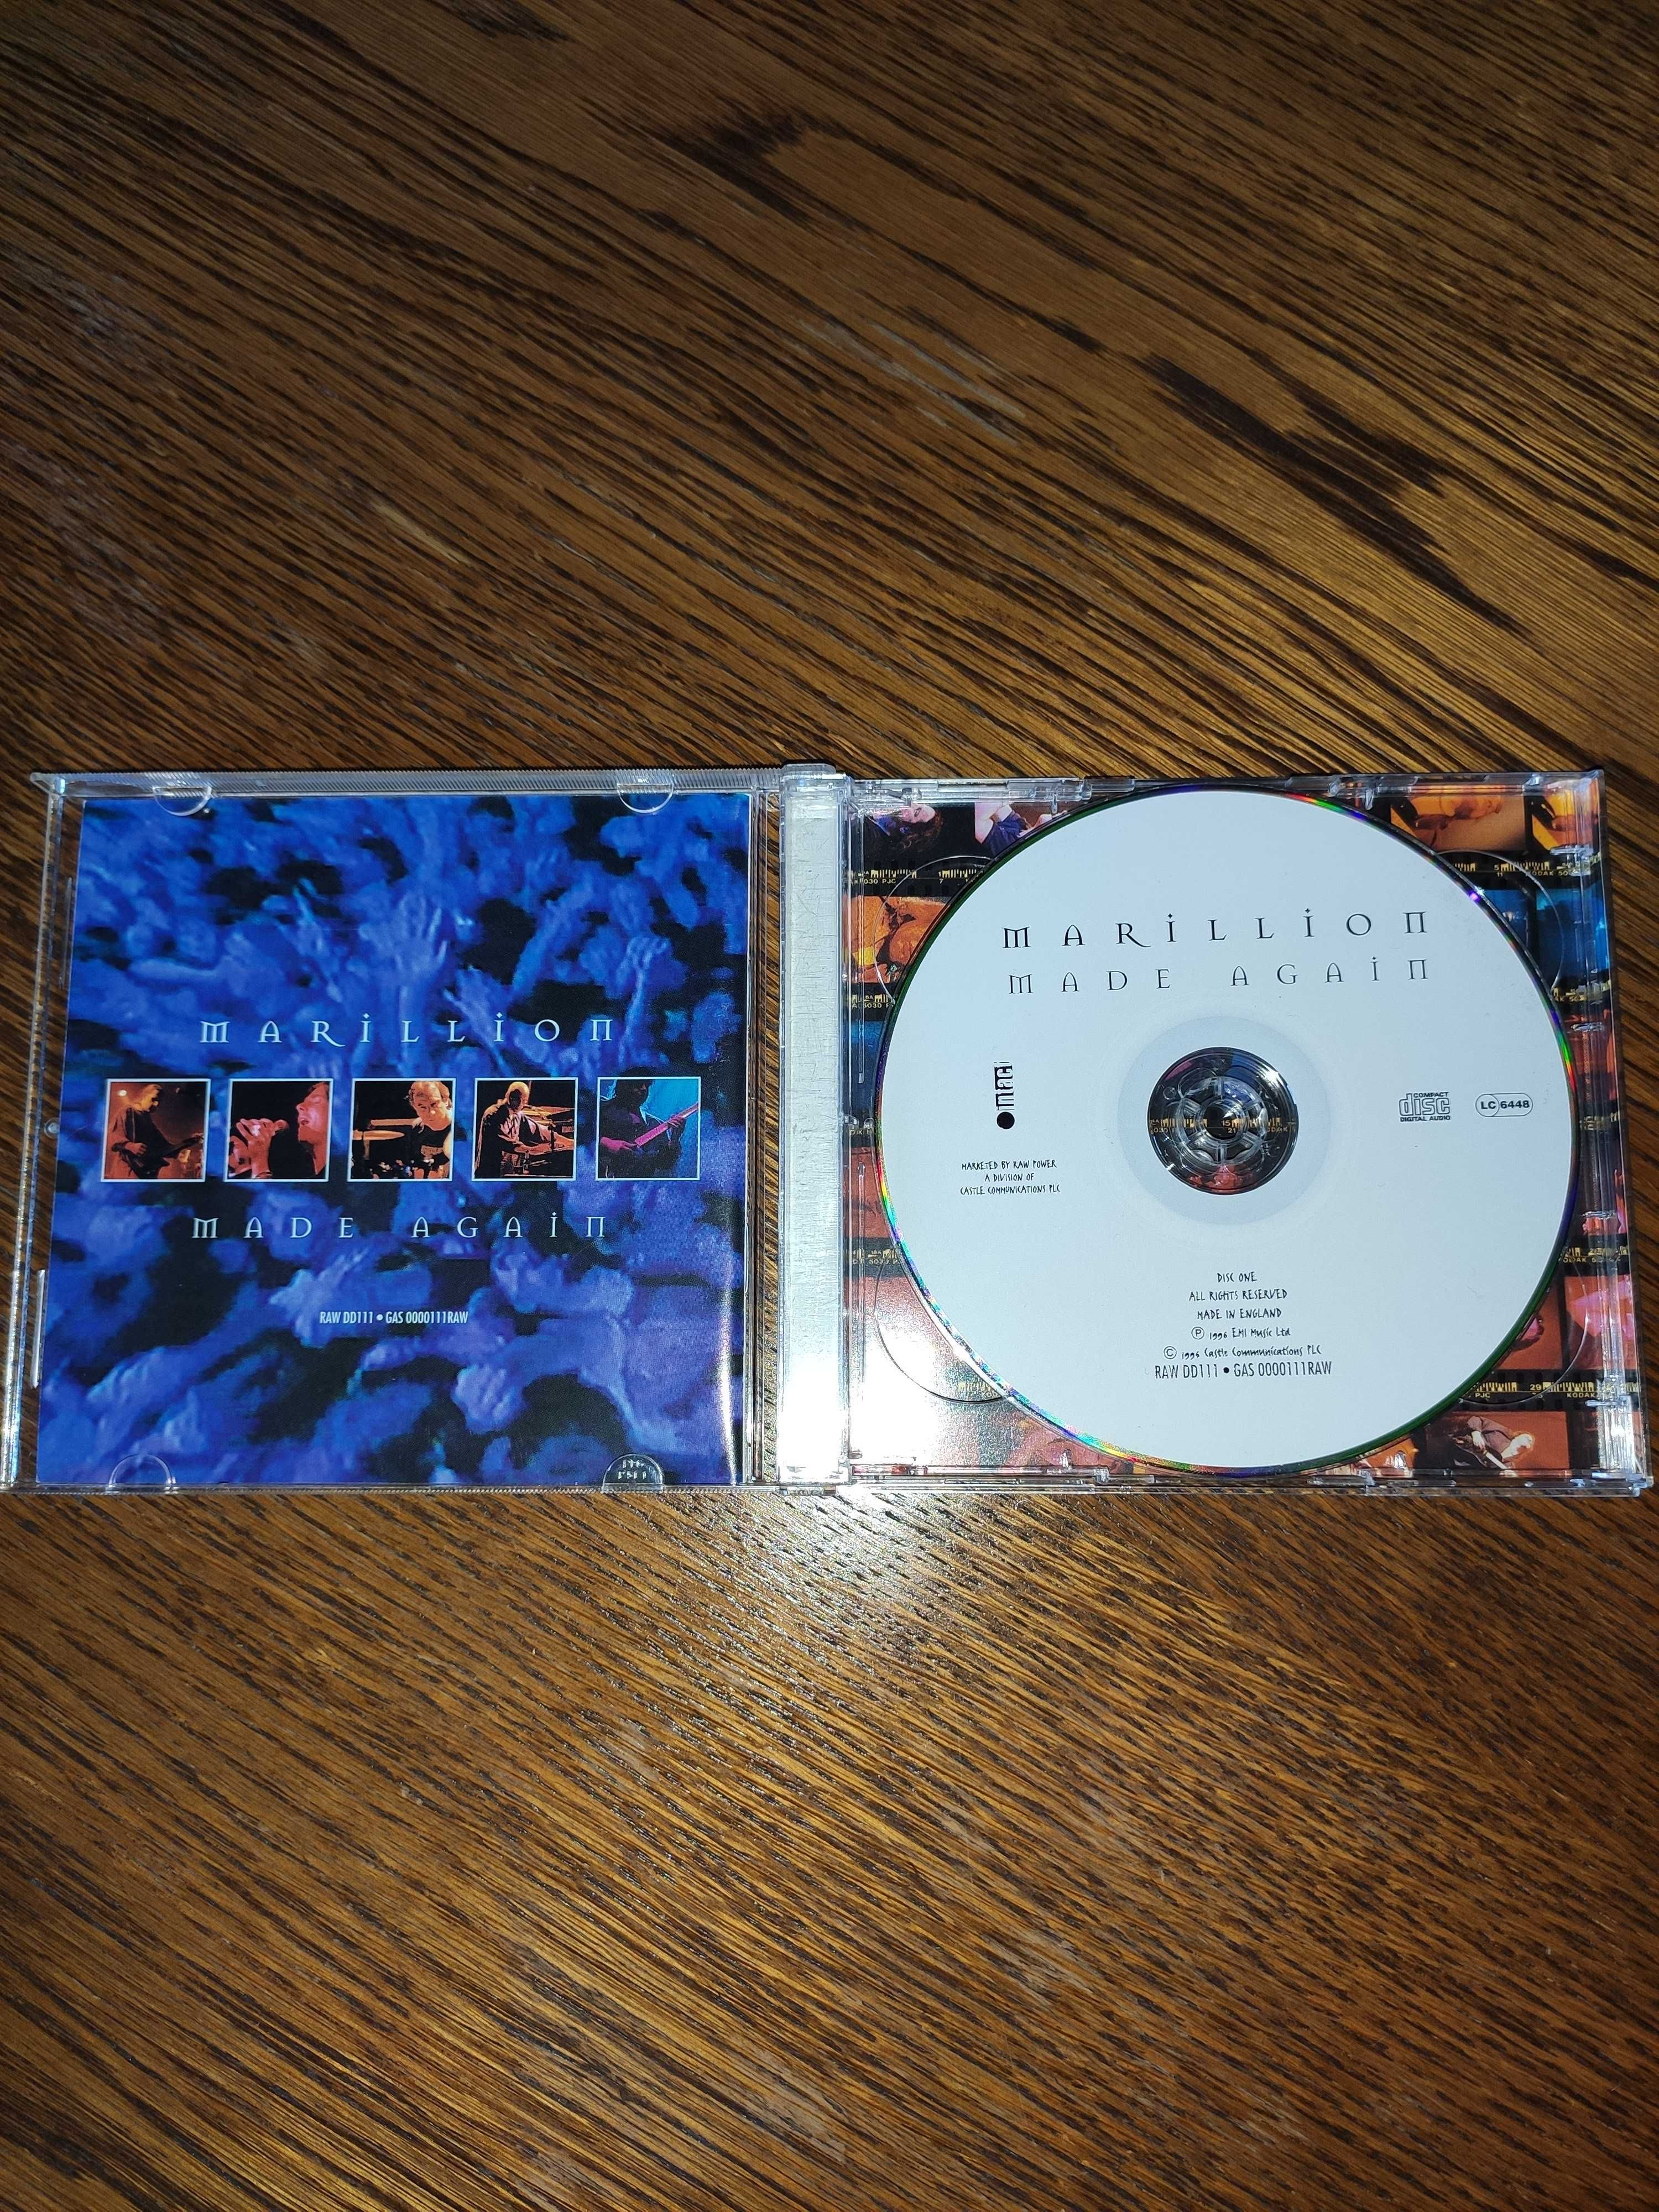 Marillion - Made again, 2CD 1996, England, Fish